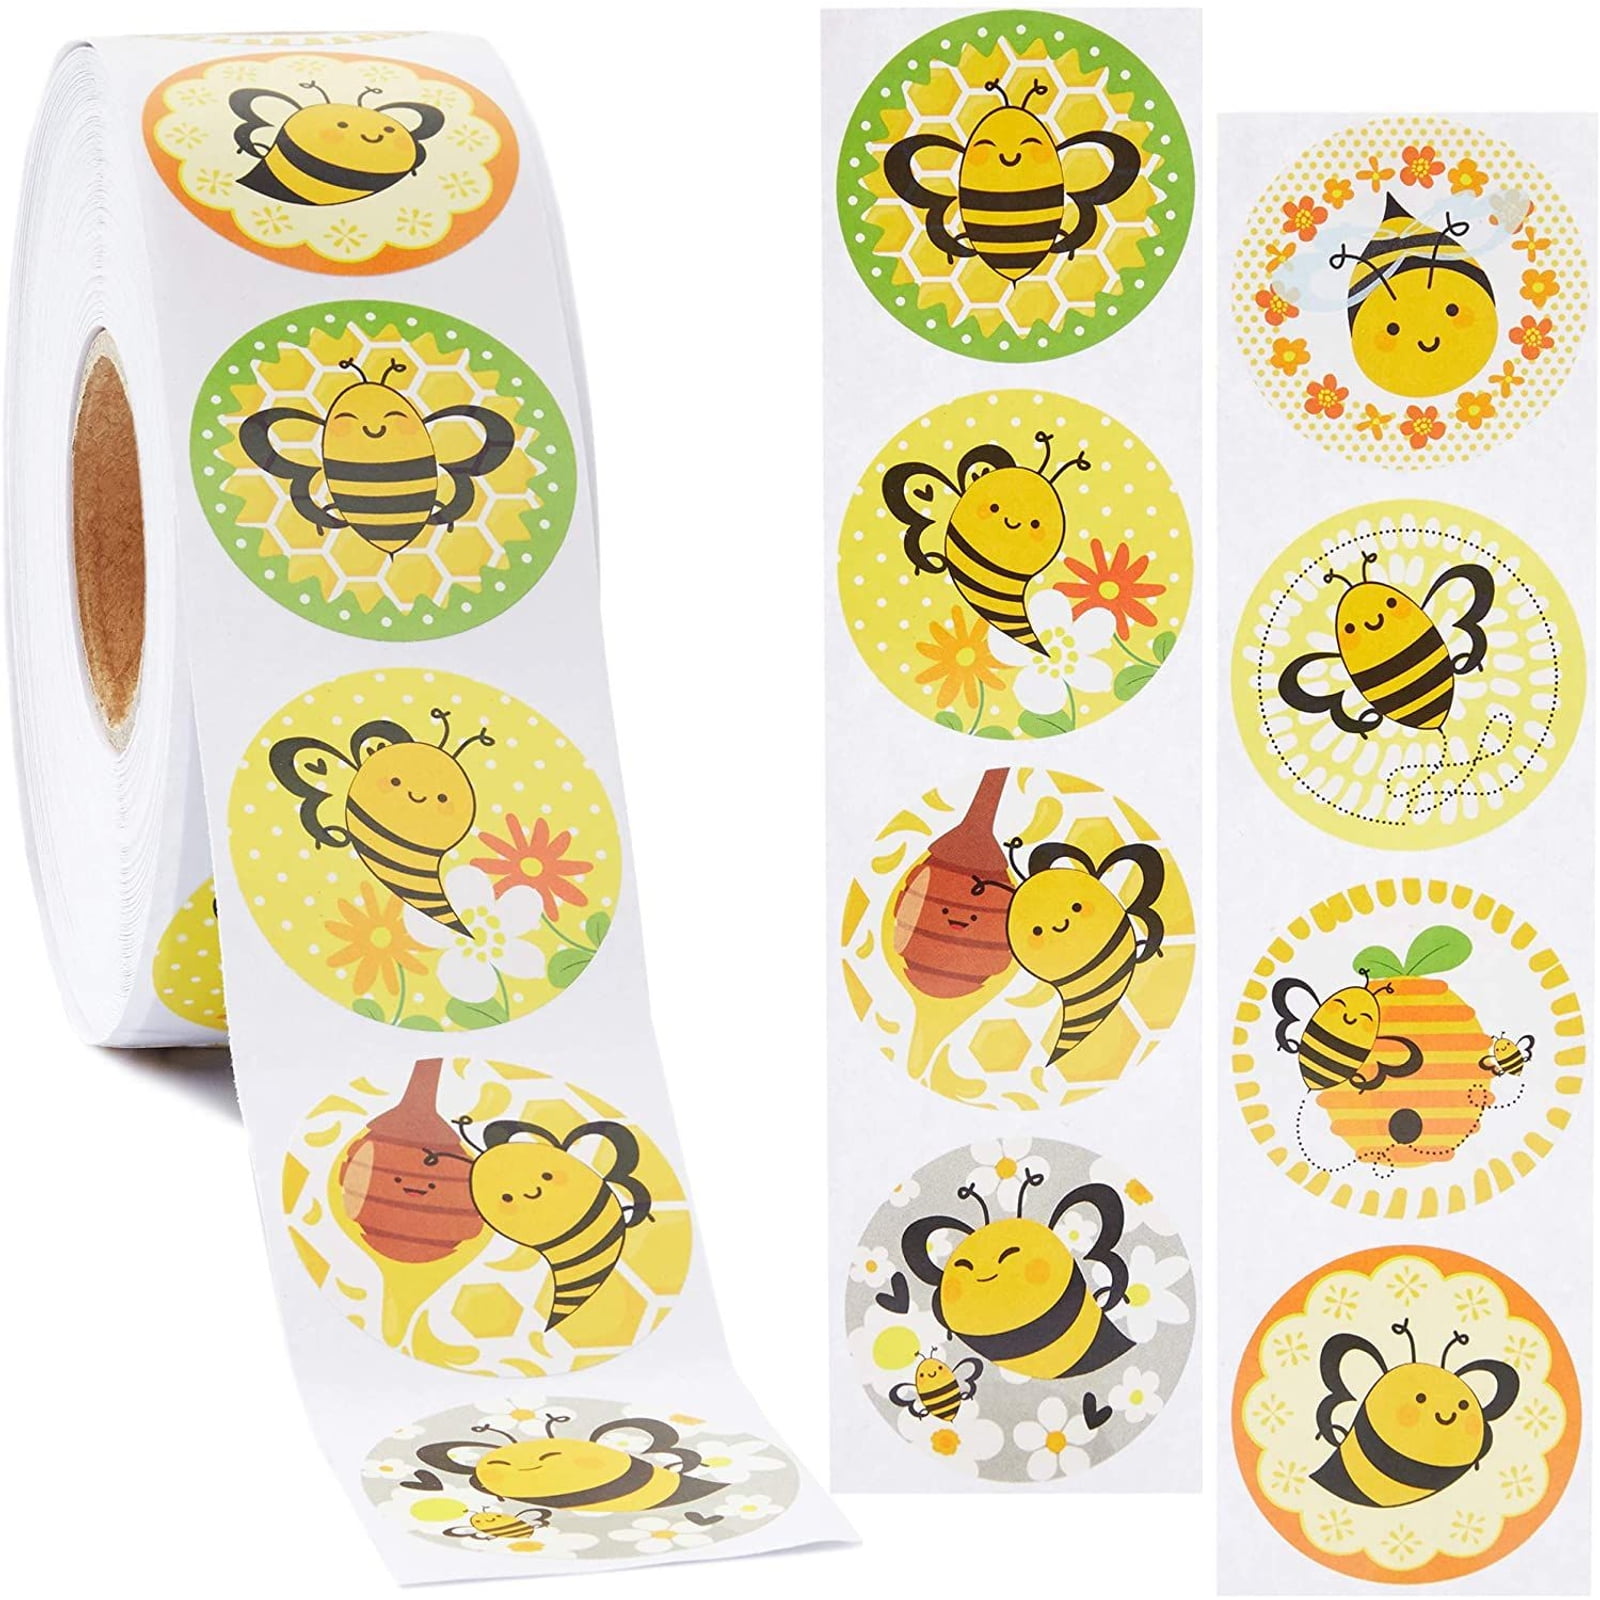 1.5 round 30 honey bumble bee stickers